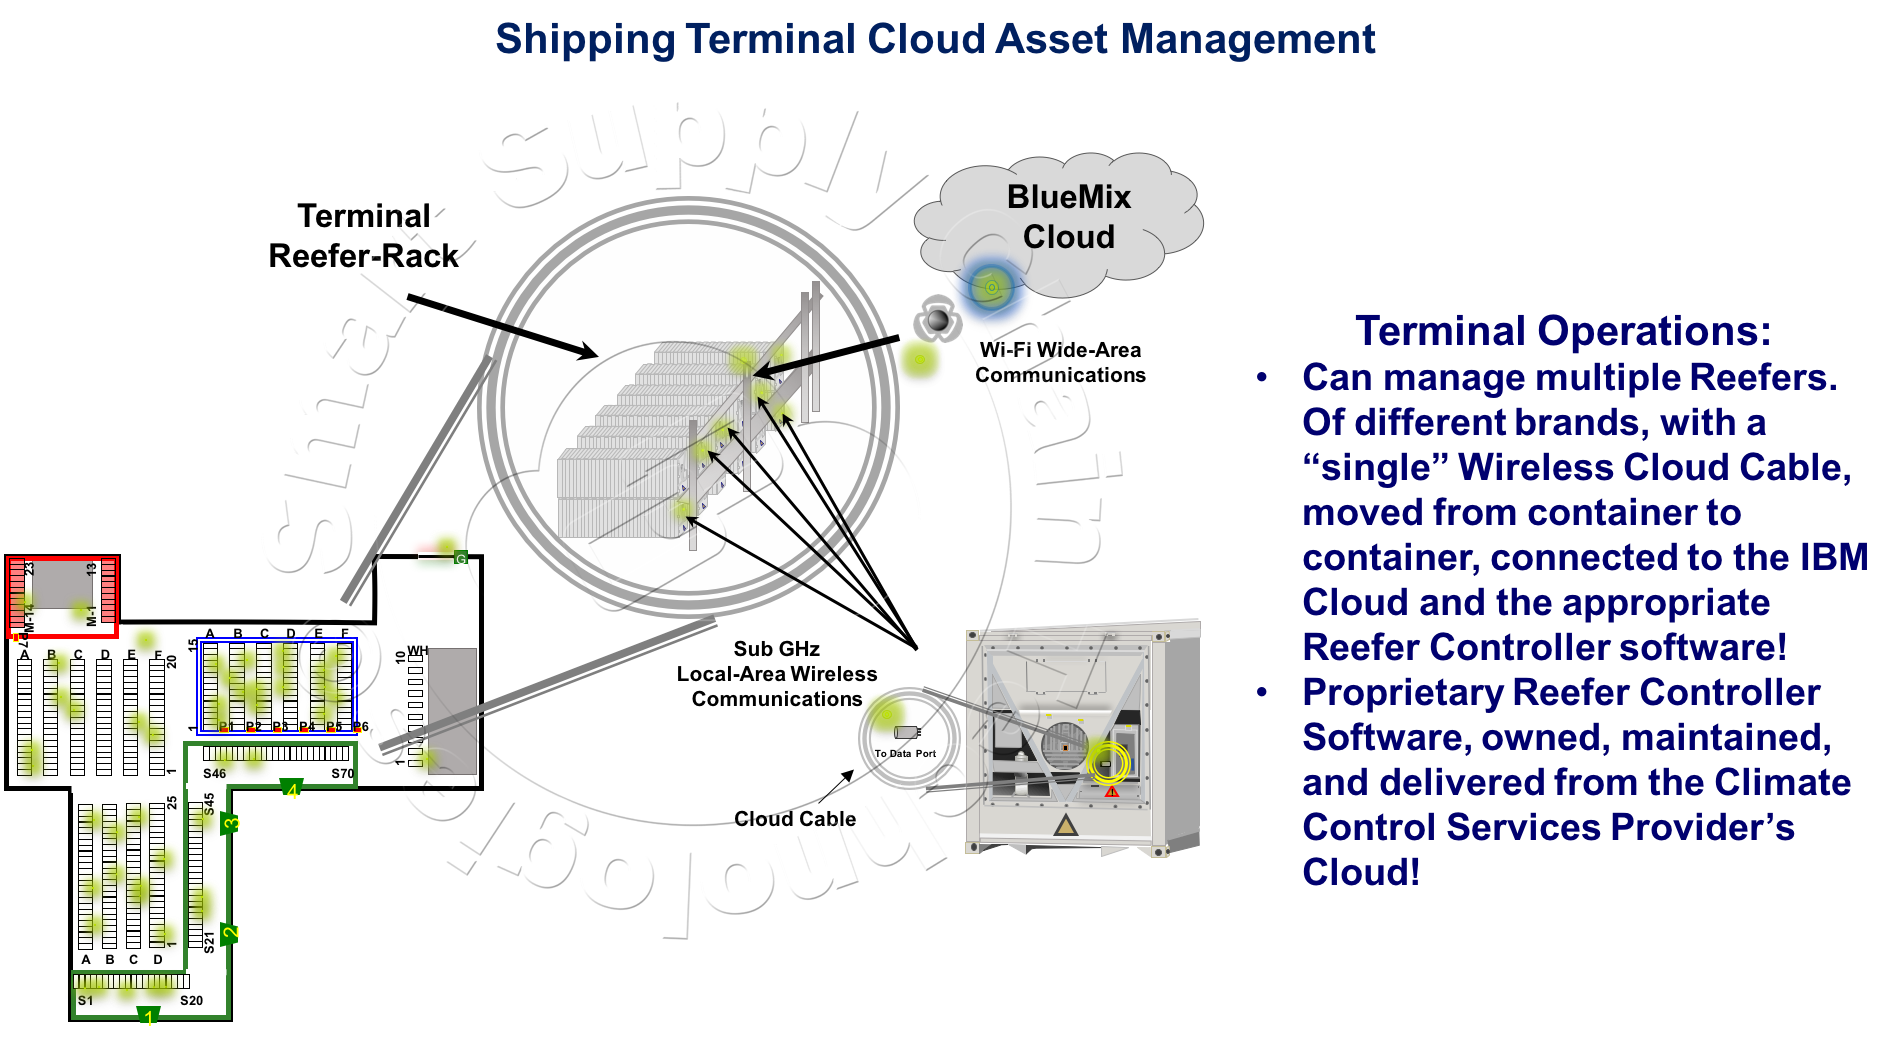 Shipping Terminal Cloud Asset Management